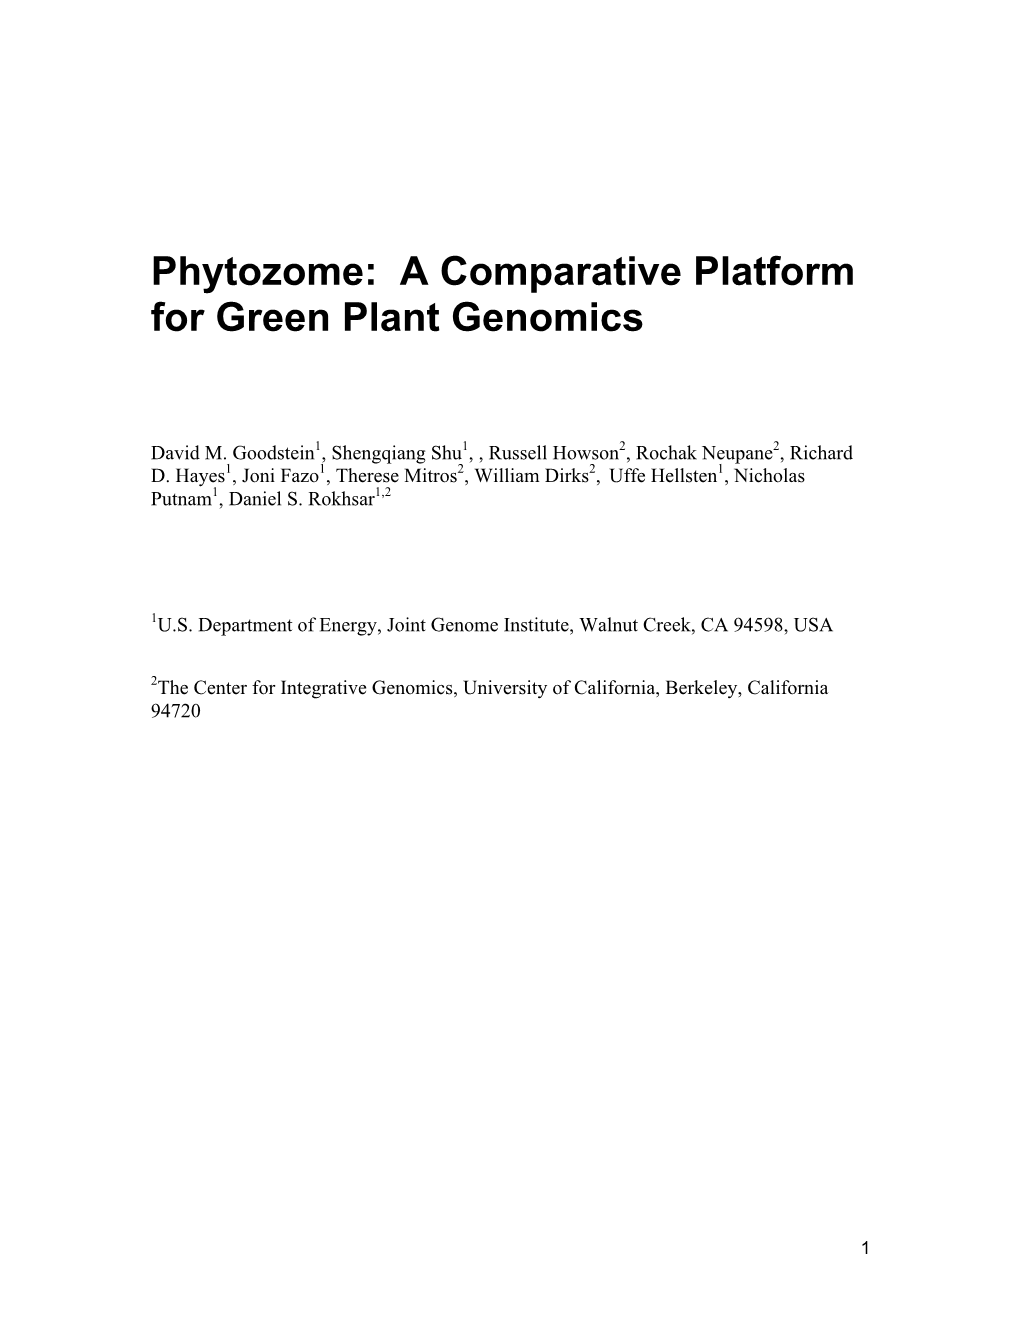 Phytozome: a Comparative Platform for Green Plant Genomics